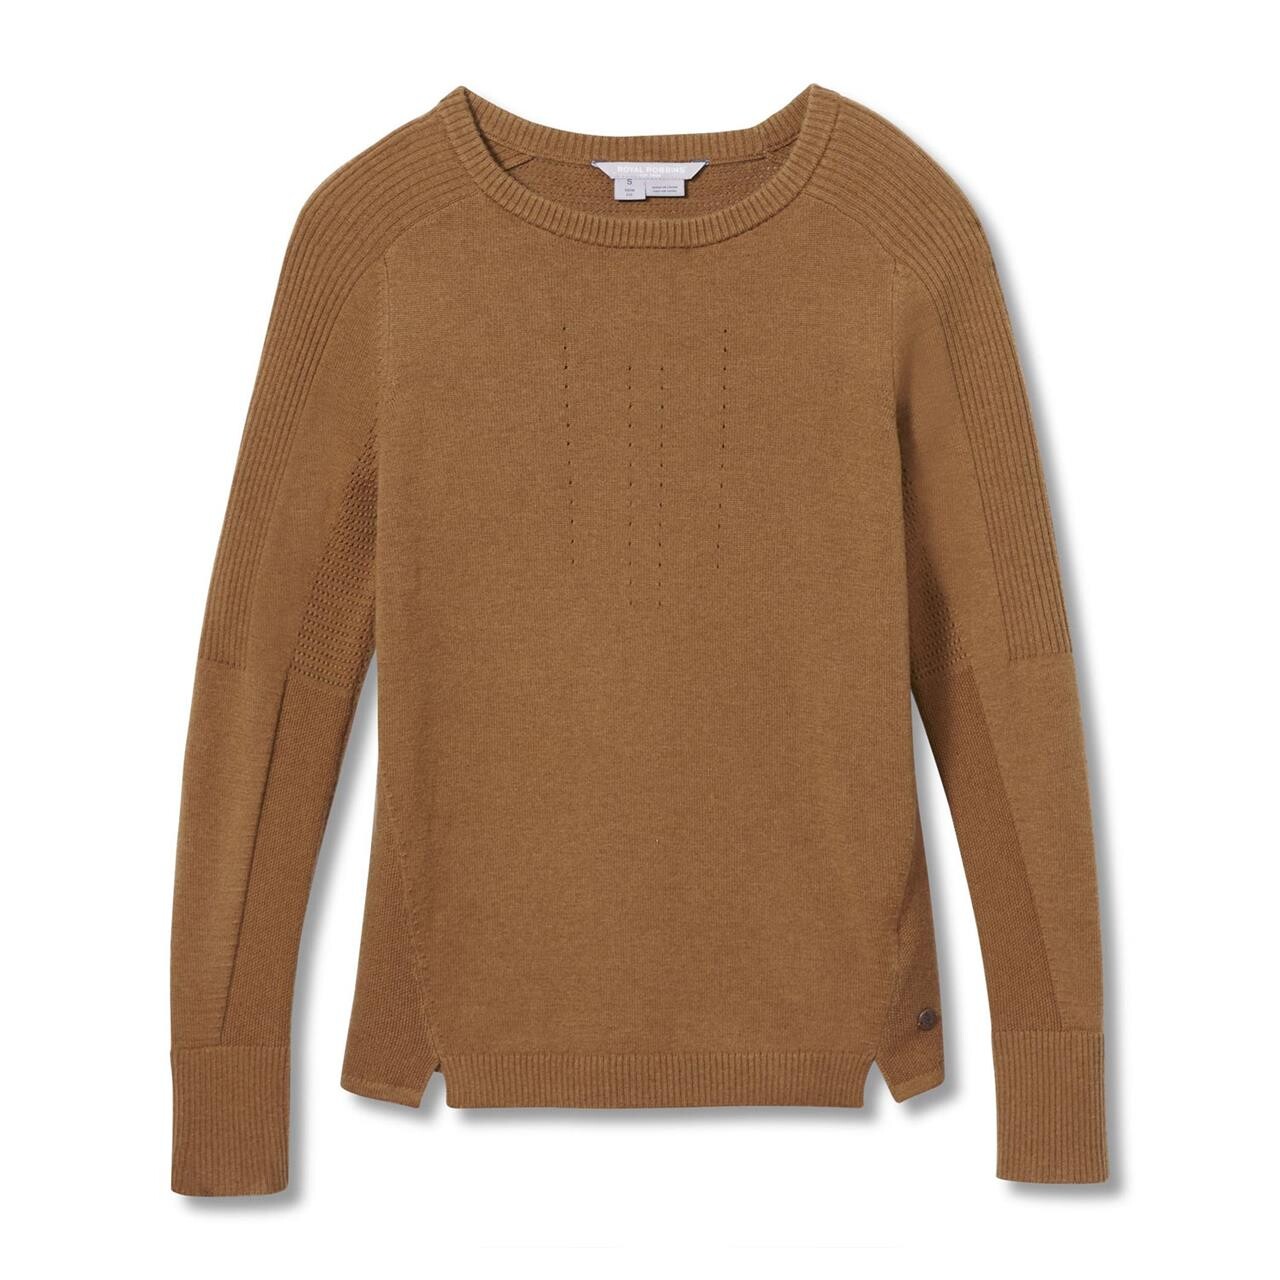 5: Royal Robbins Womens Ventour Sweater  (Brun (WALNUT) Medium)